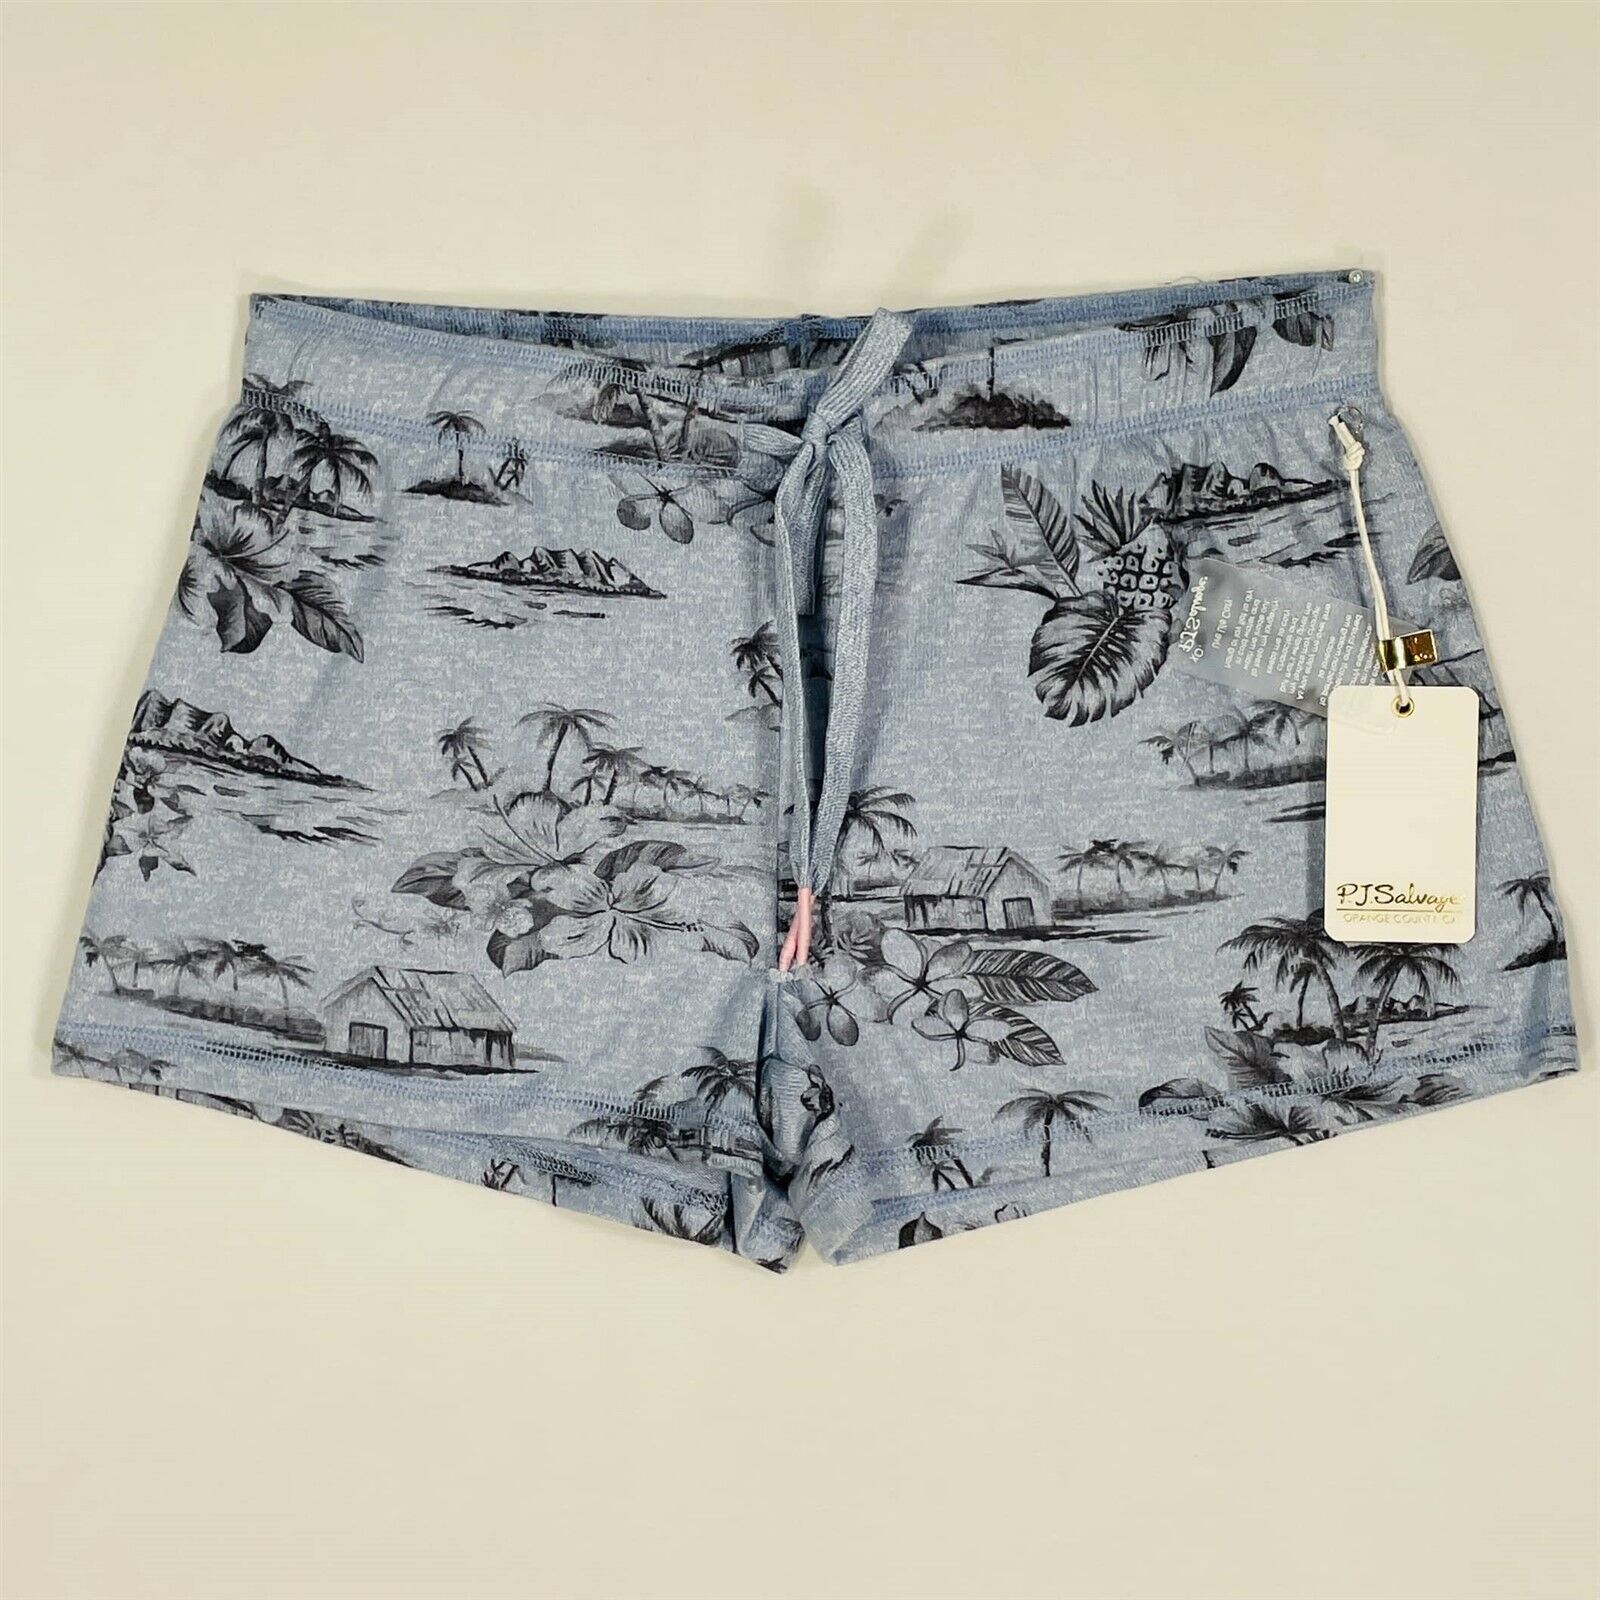 PJ Salvage Shorts Small Soft Stretch Knit Blue Tropical Print